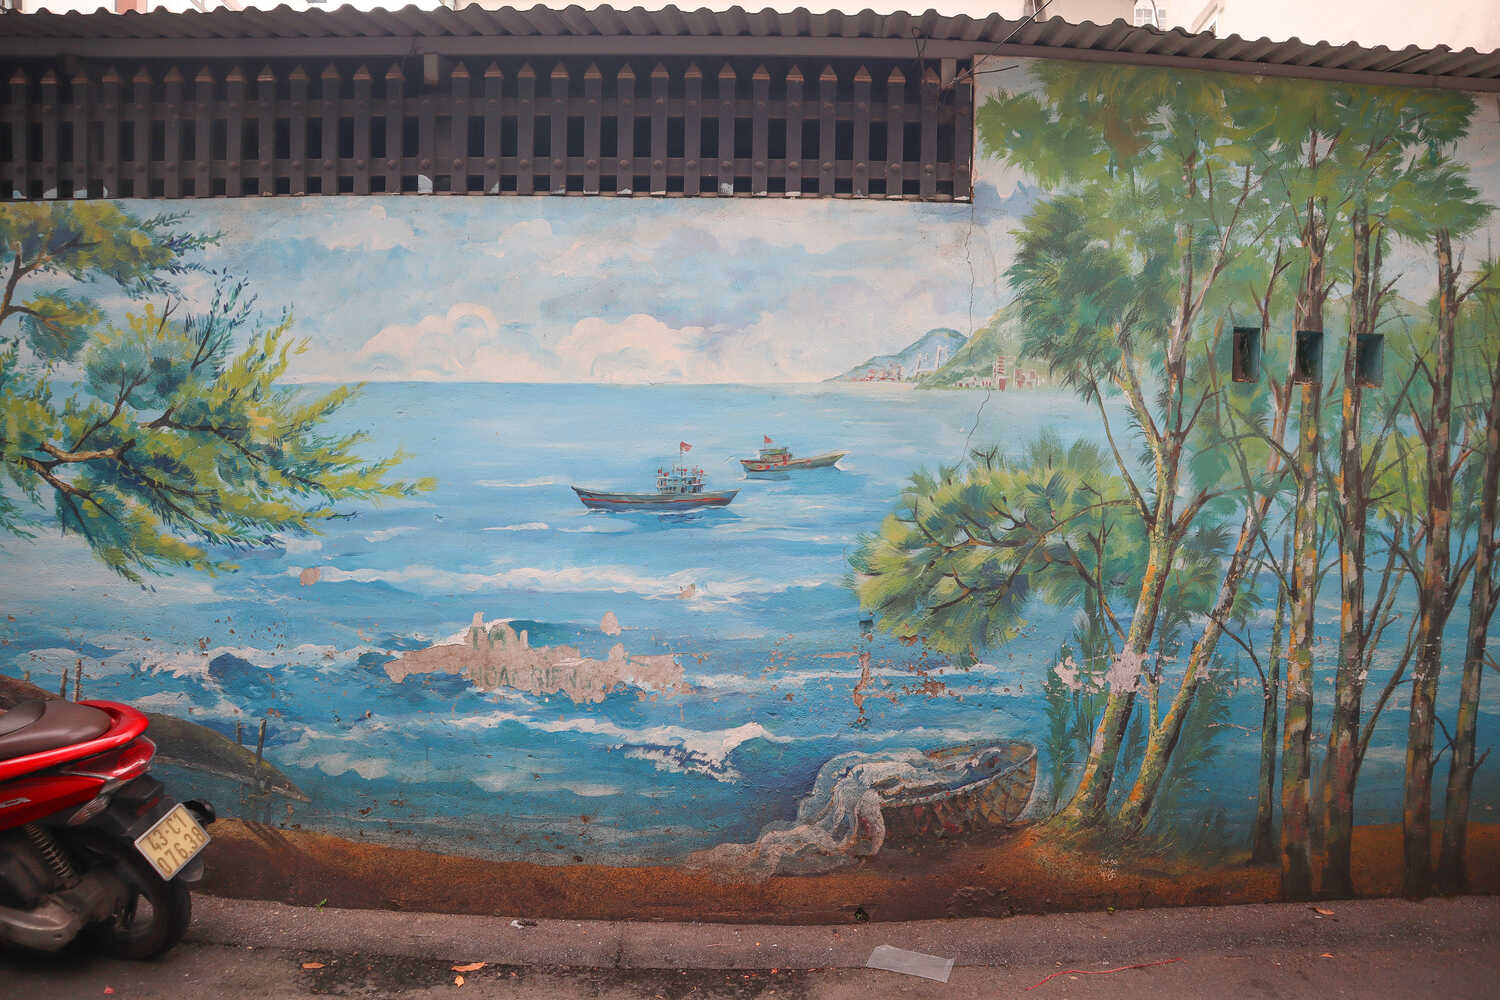 Beautiful graffiti depicting the Son Tra Peninsula and boats at Da Nang Fresco Village